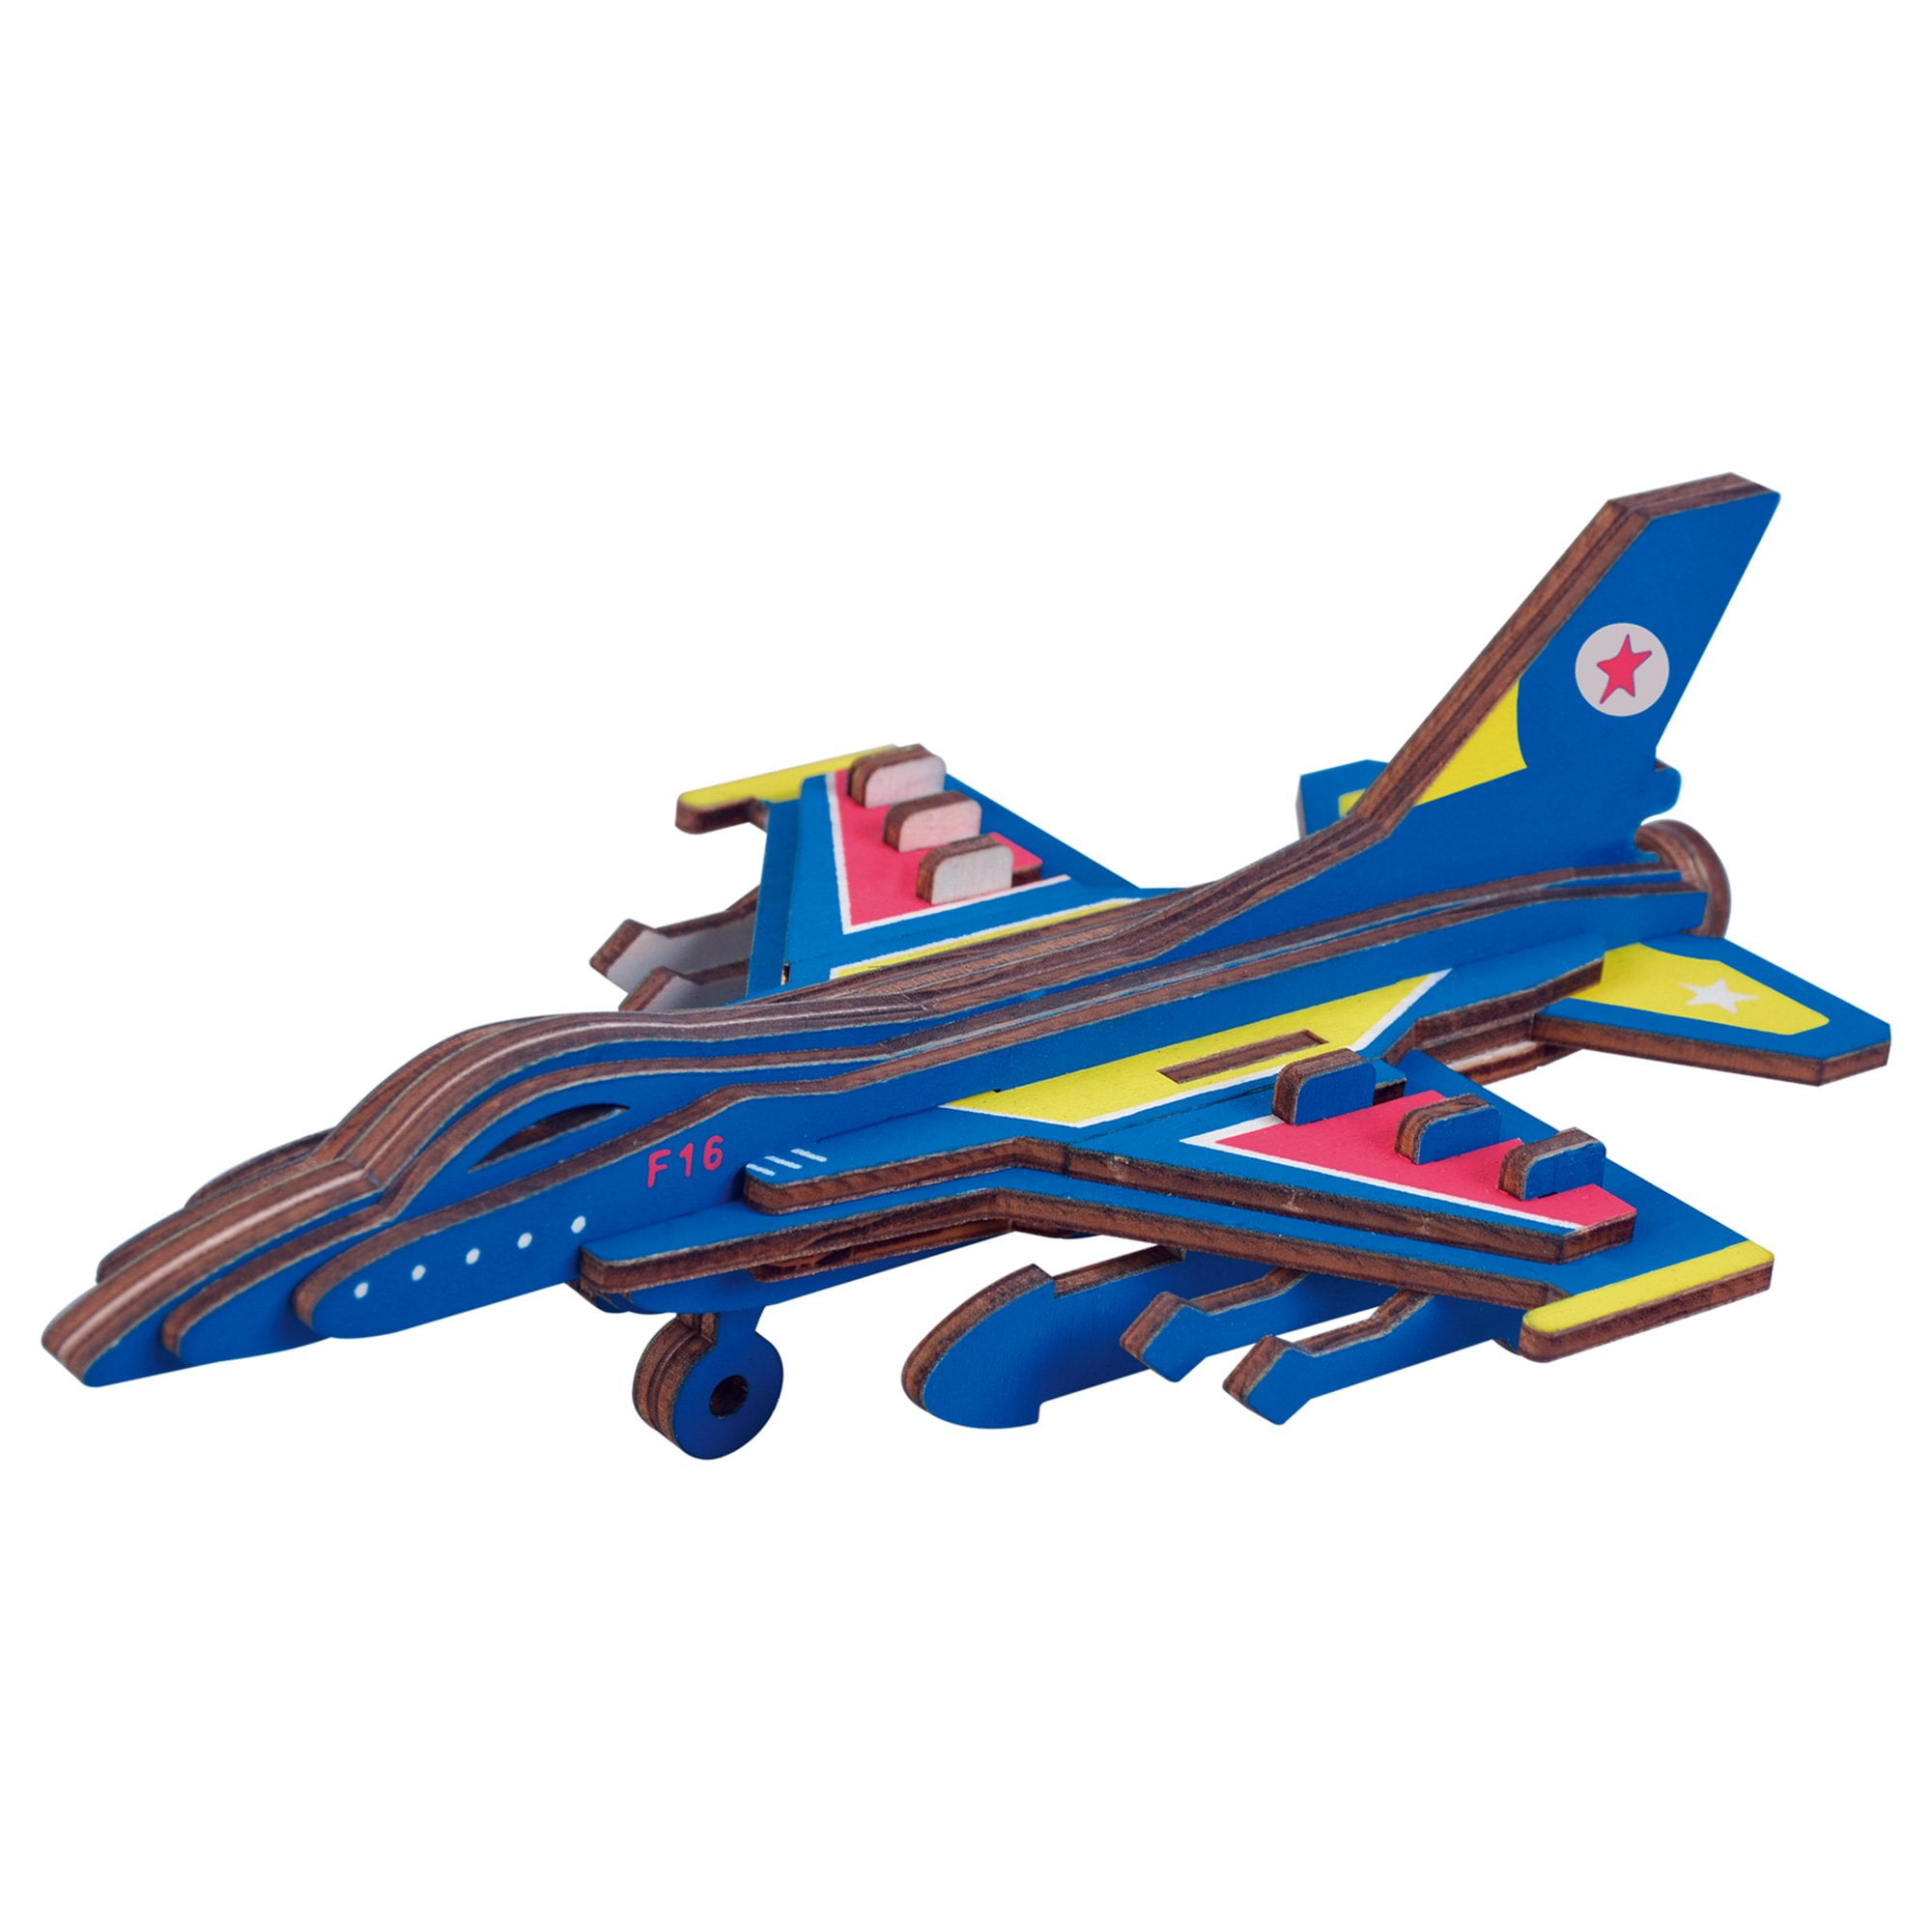 F-16 Fighter Plane 3D PUZZLE WOODCRAFT CONSTRUCTION KIT 